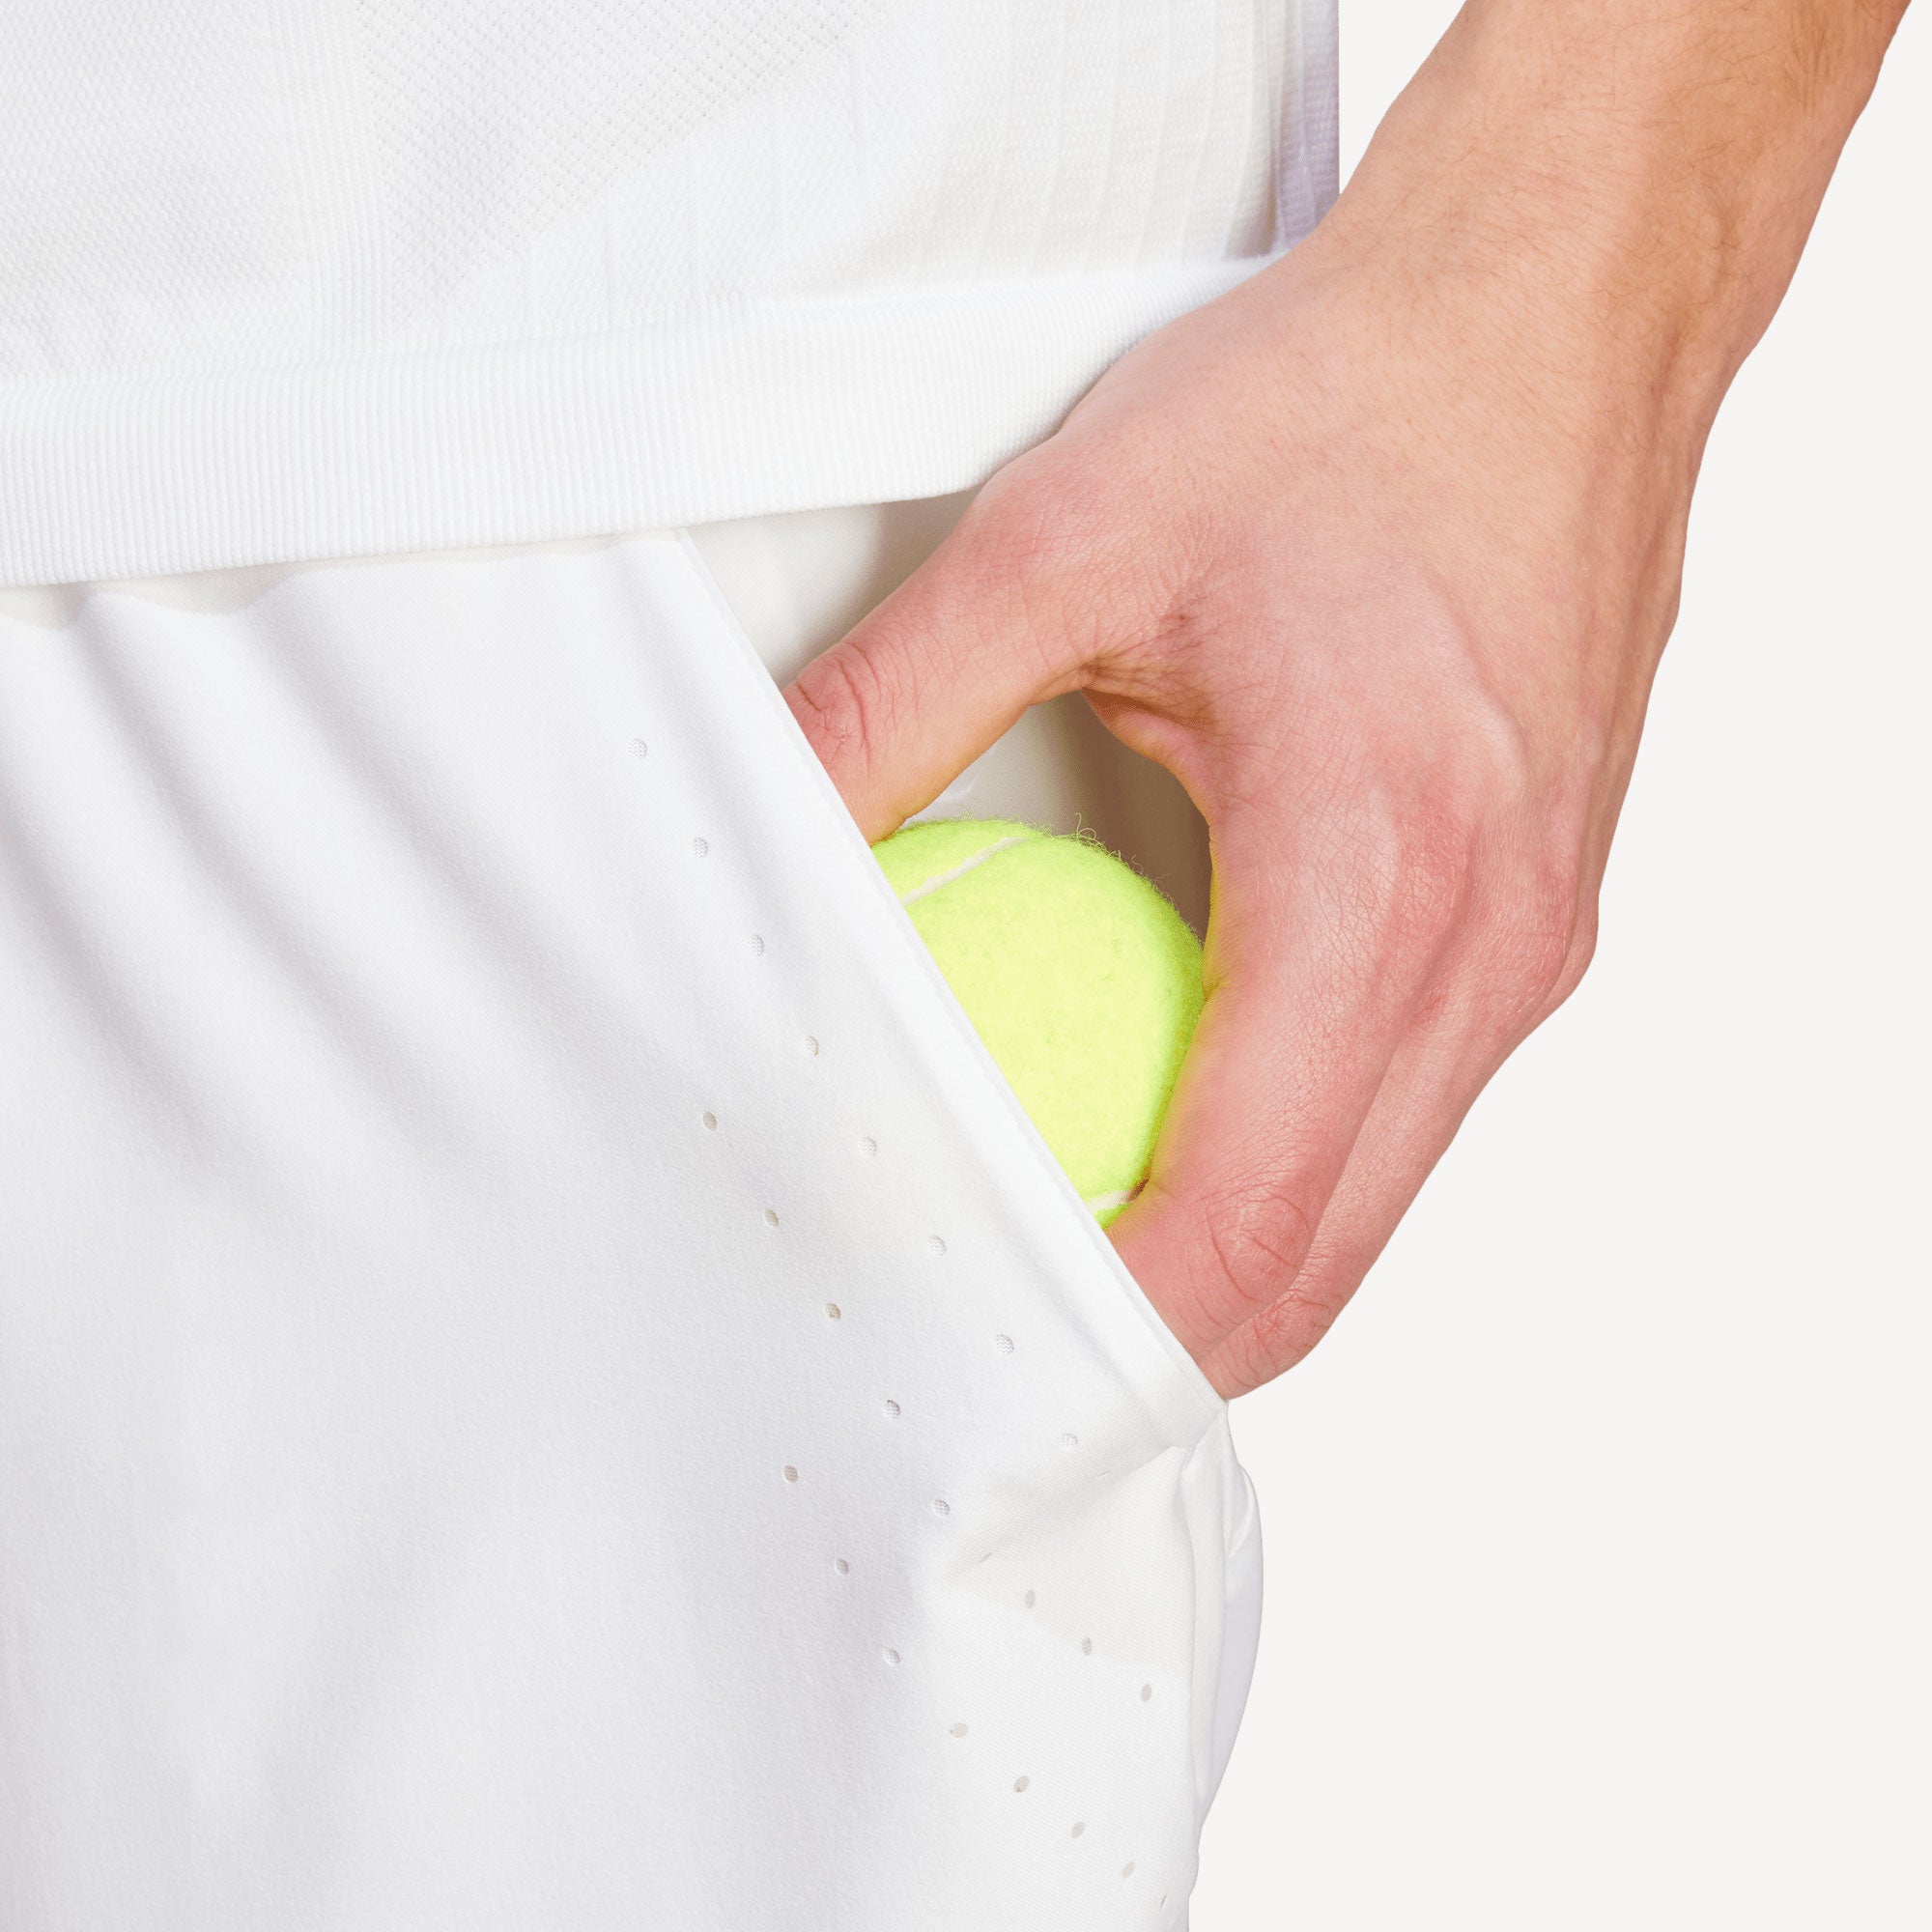 adidas Pro London Men's Tennis Shorts and Inner Shorts Set - White (5)